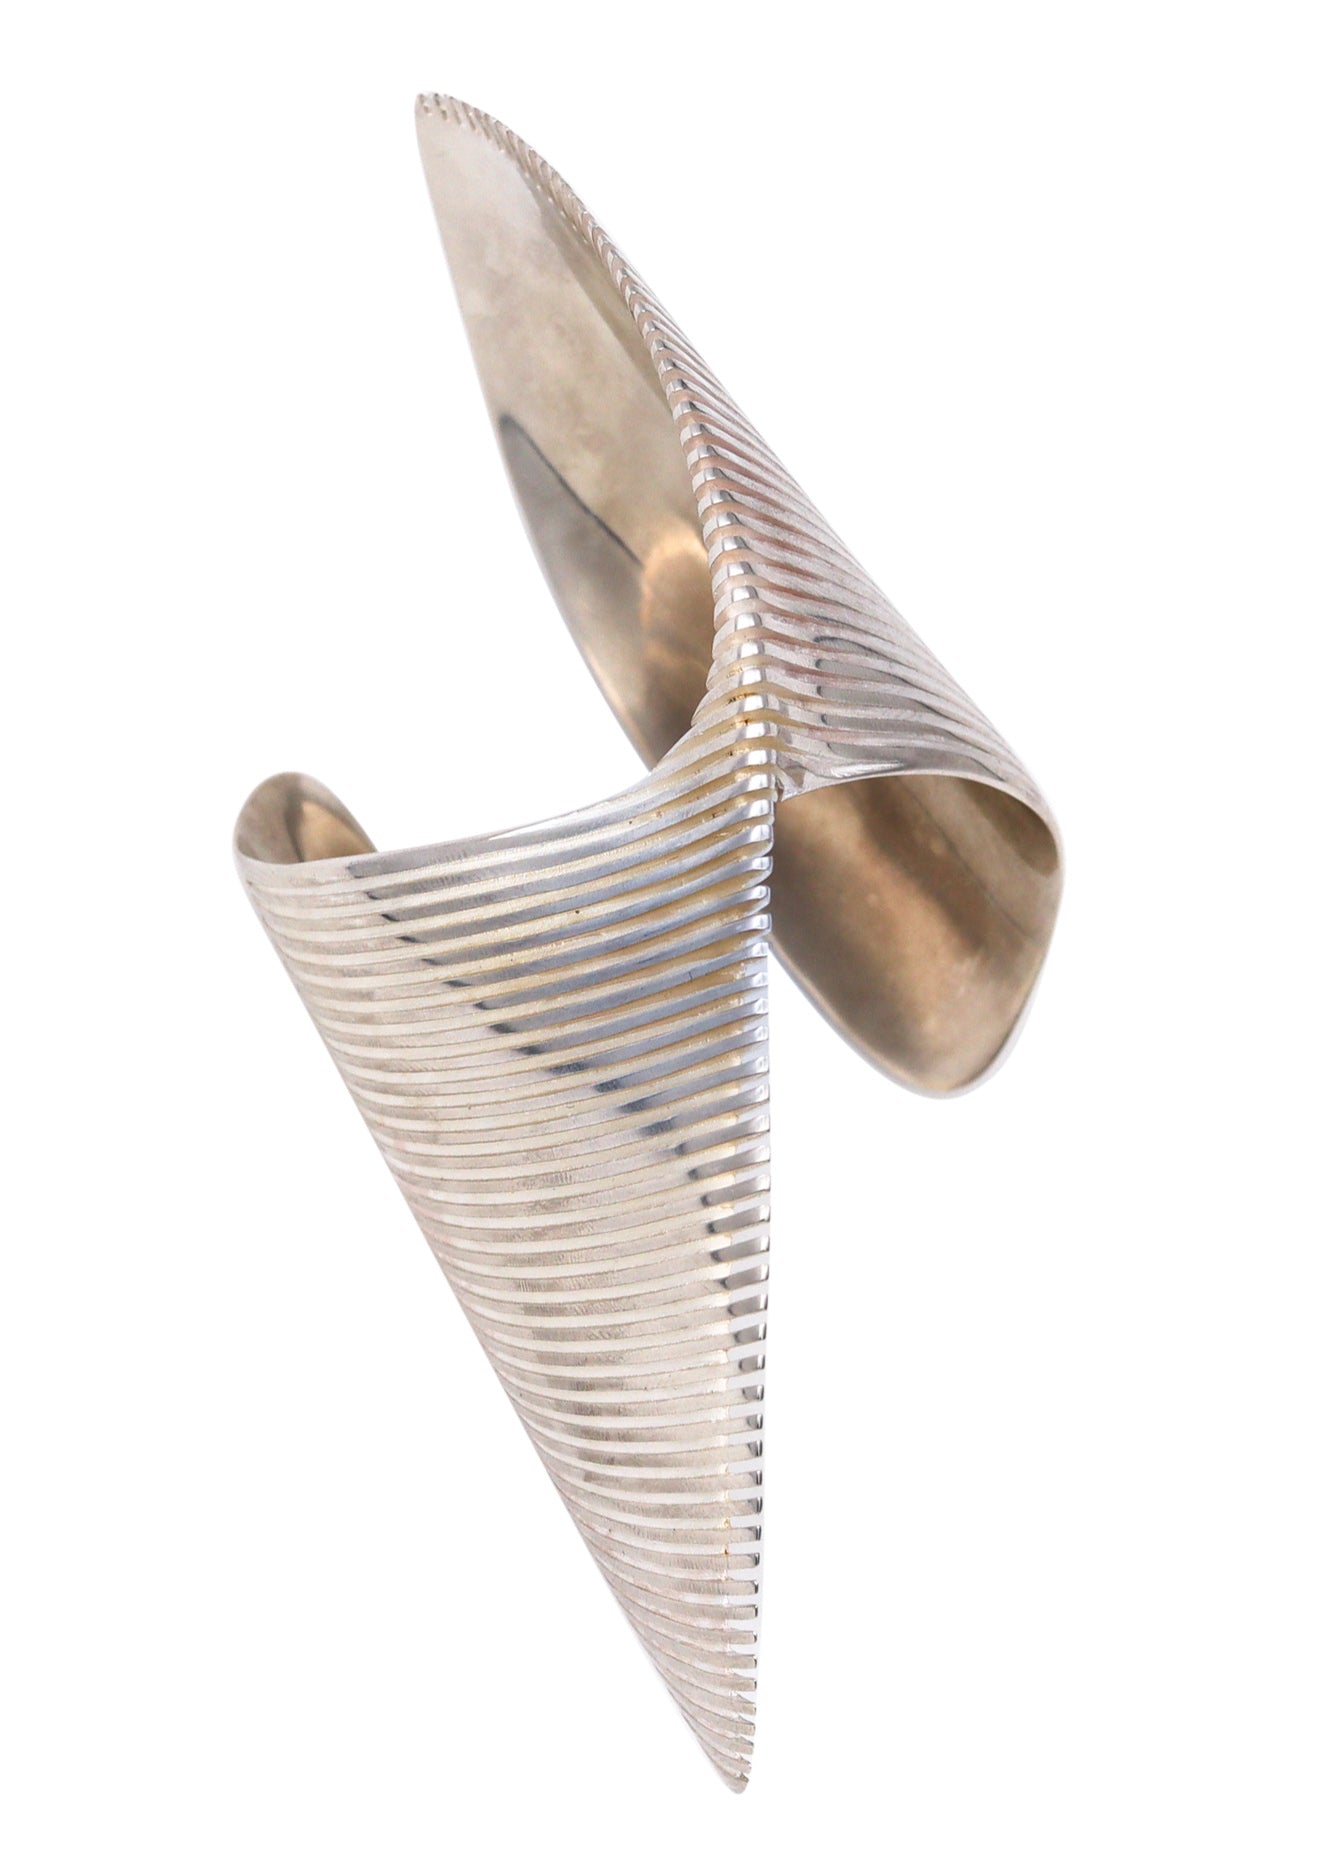 *Zaha Hadid for Georg Jensen 2016 Lamellae Sculptural arm-wrist cuff in solid .925 Sterling Silver